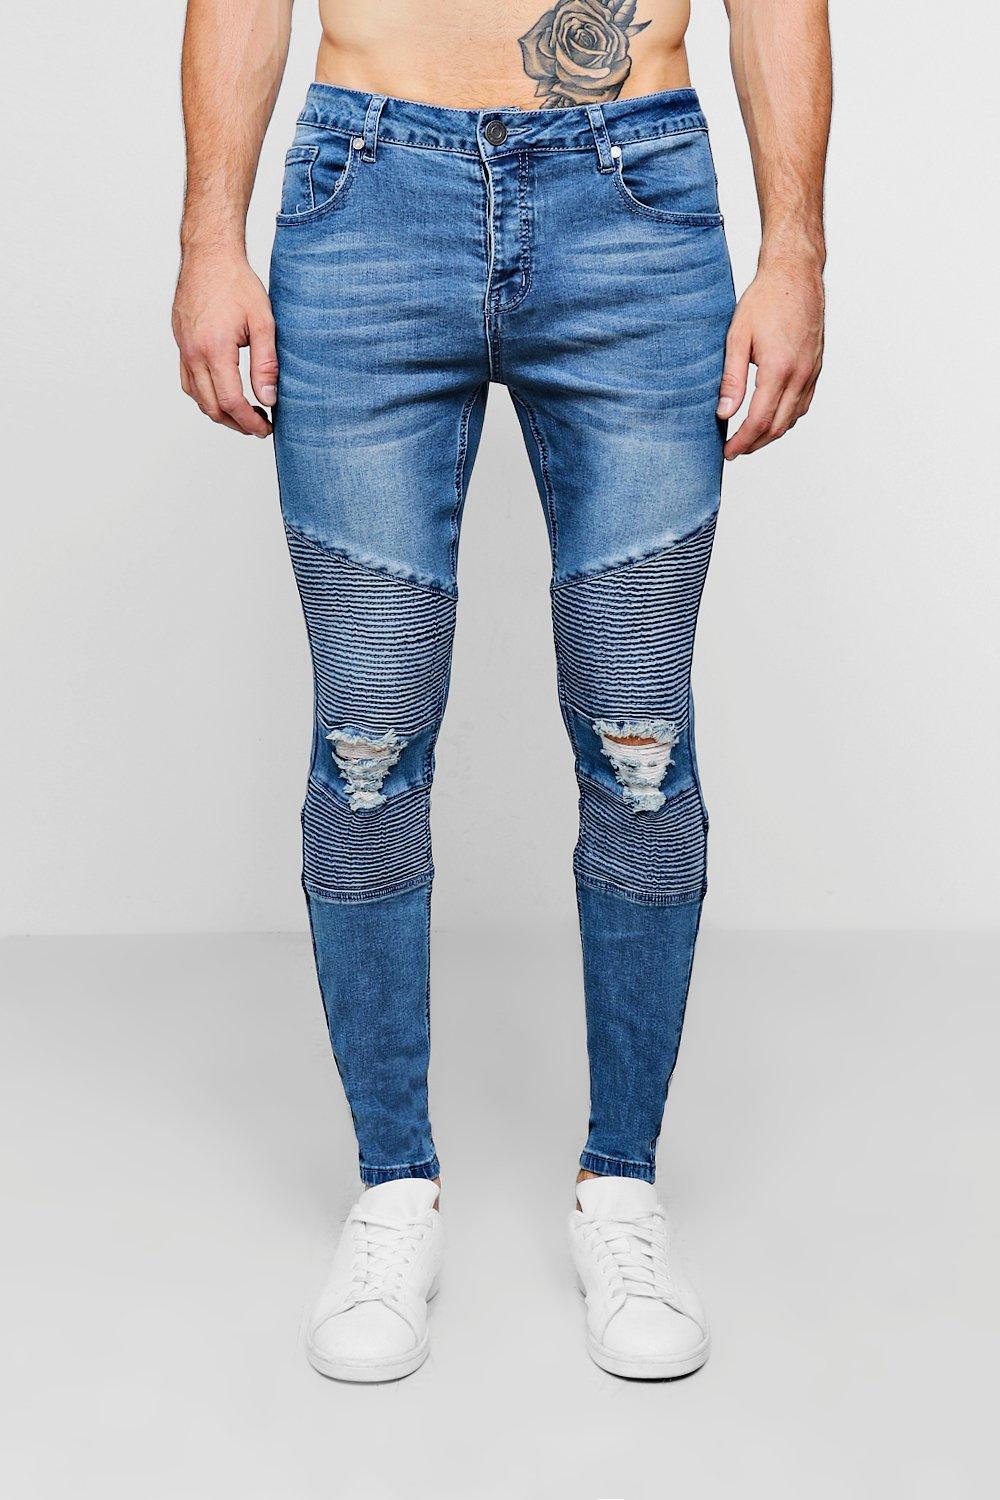 BoohooMAN Denim Mid Blue Biker Detail Skinny Fit Jeans for Men - Lyst